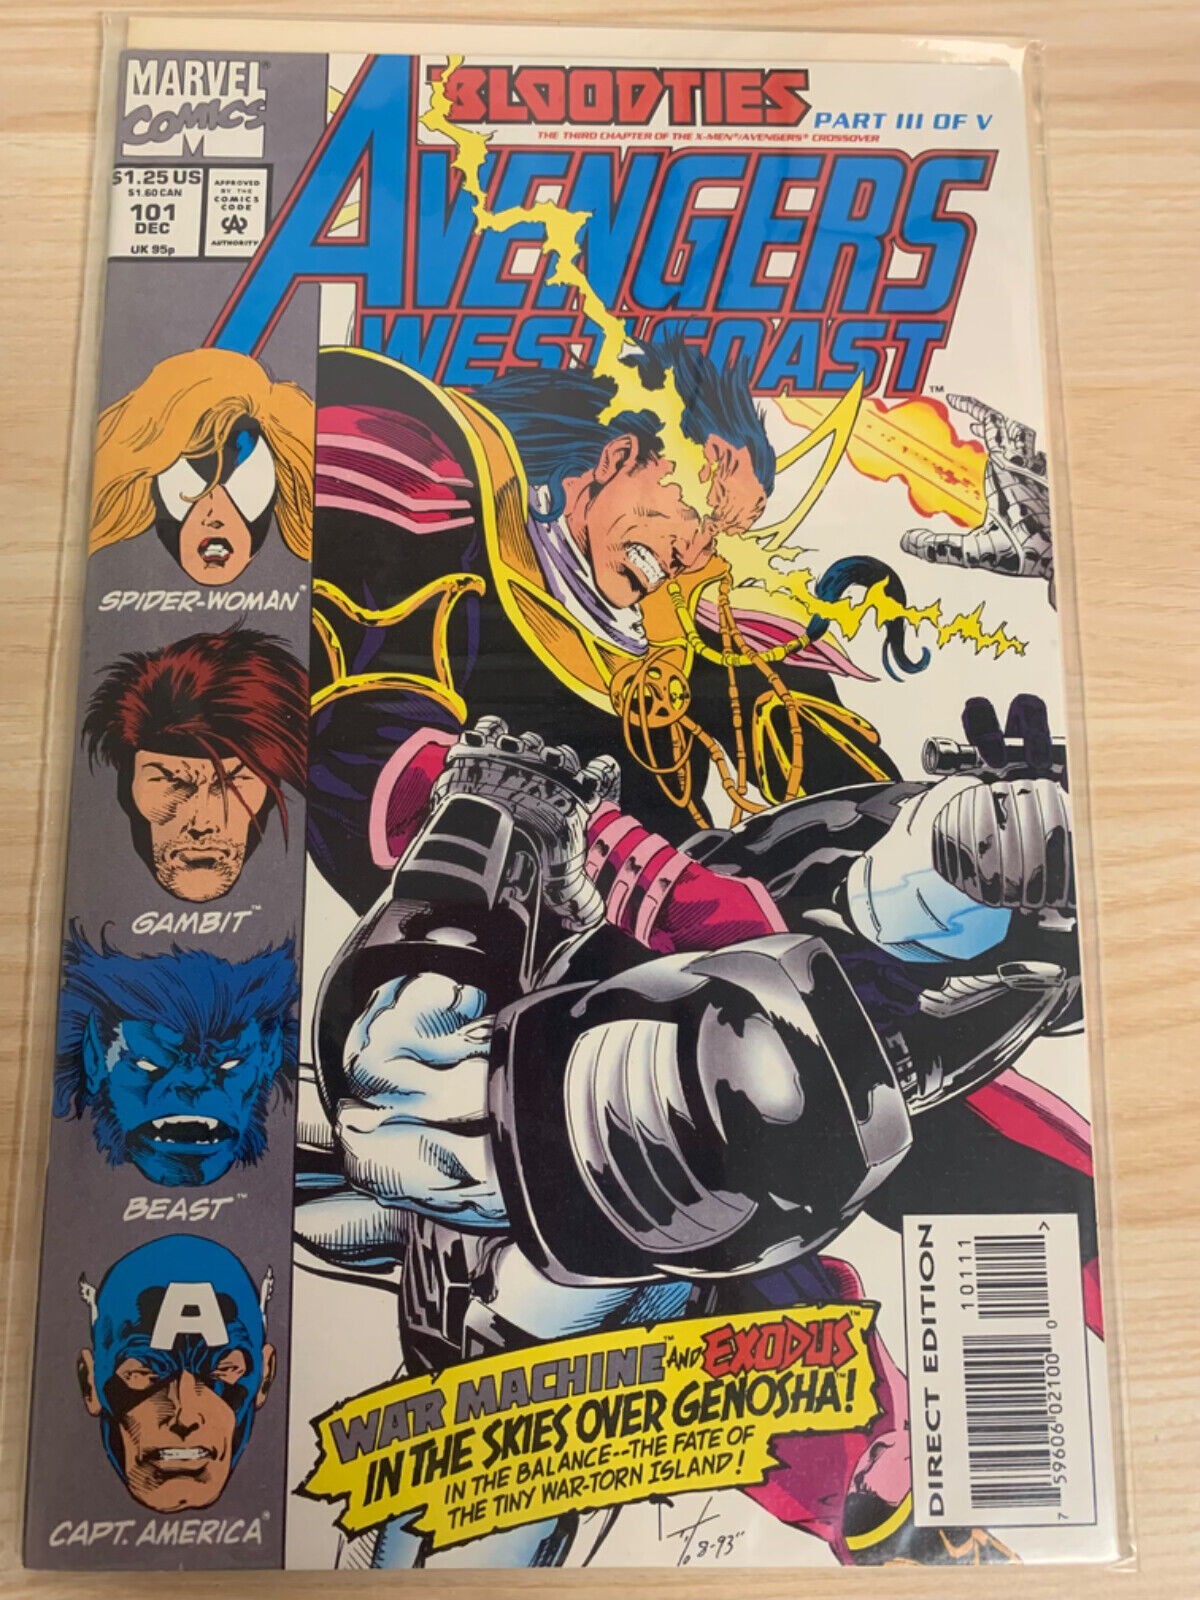 Avengers West Coast #101 (bloodties part 3 of 5) _ Marvel Comics 1993 NM 